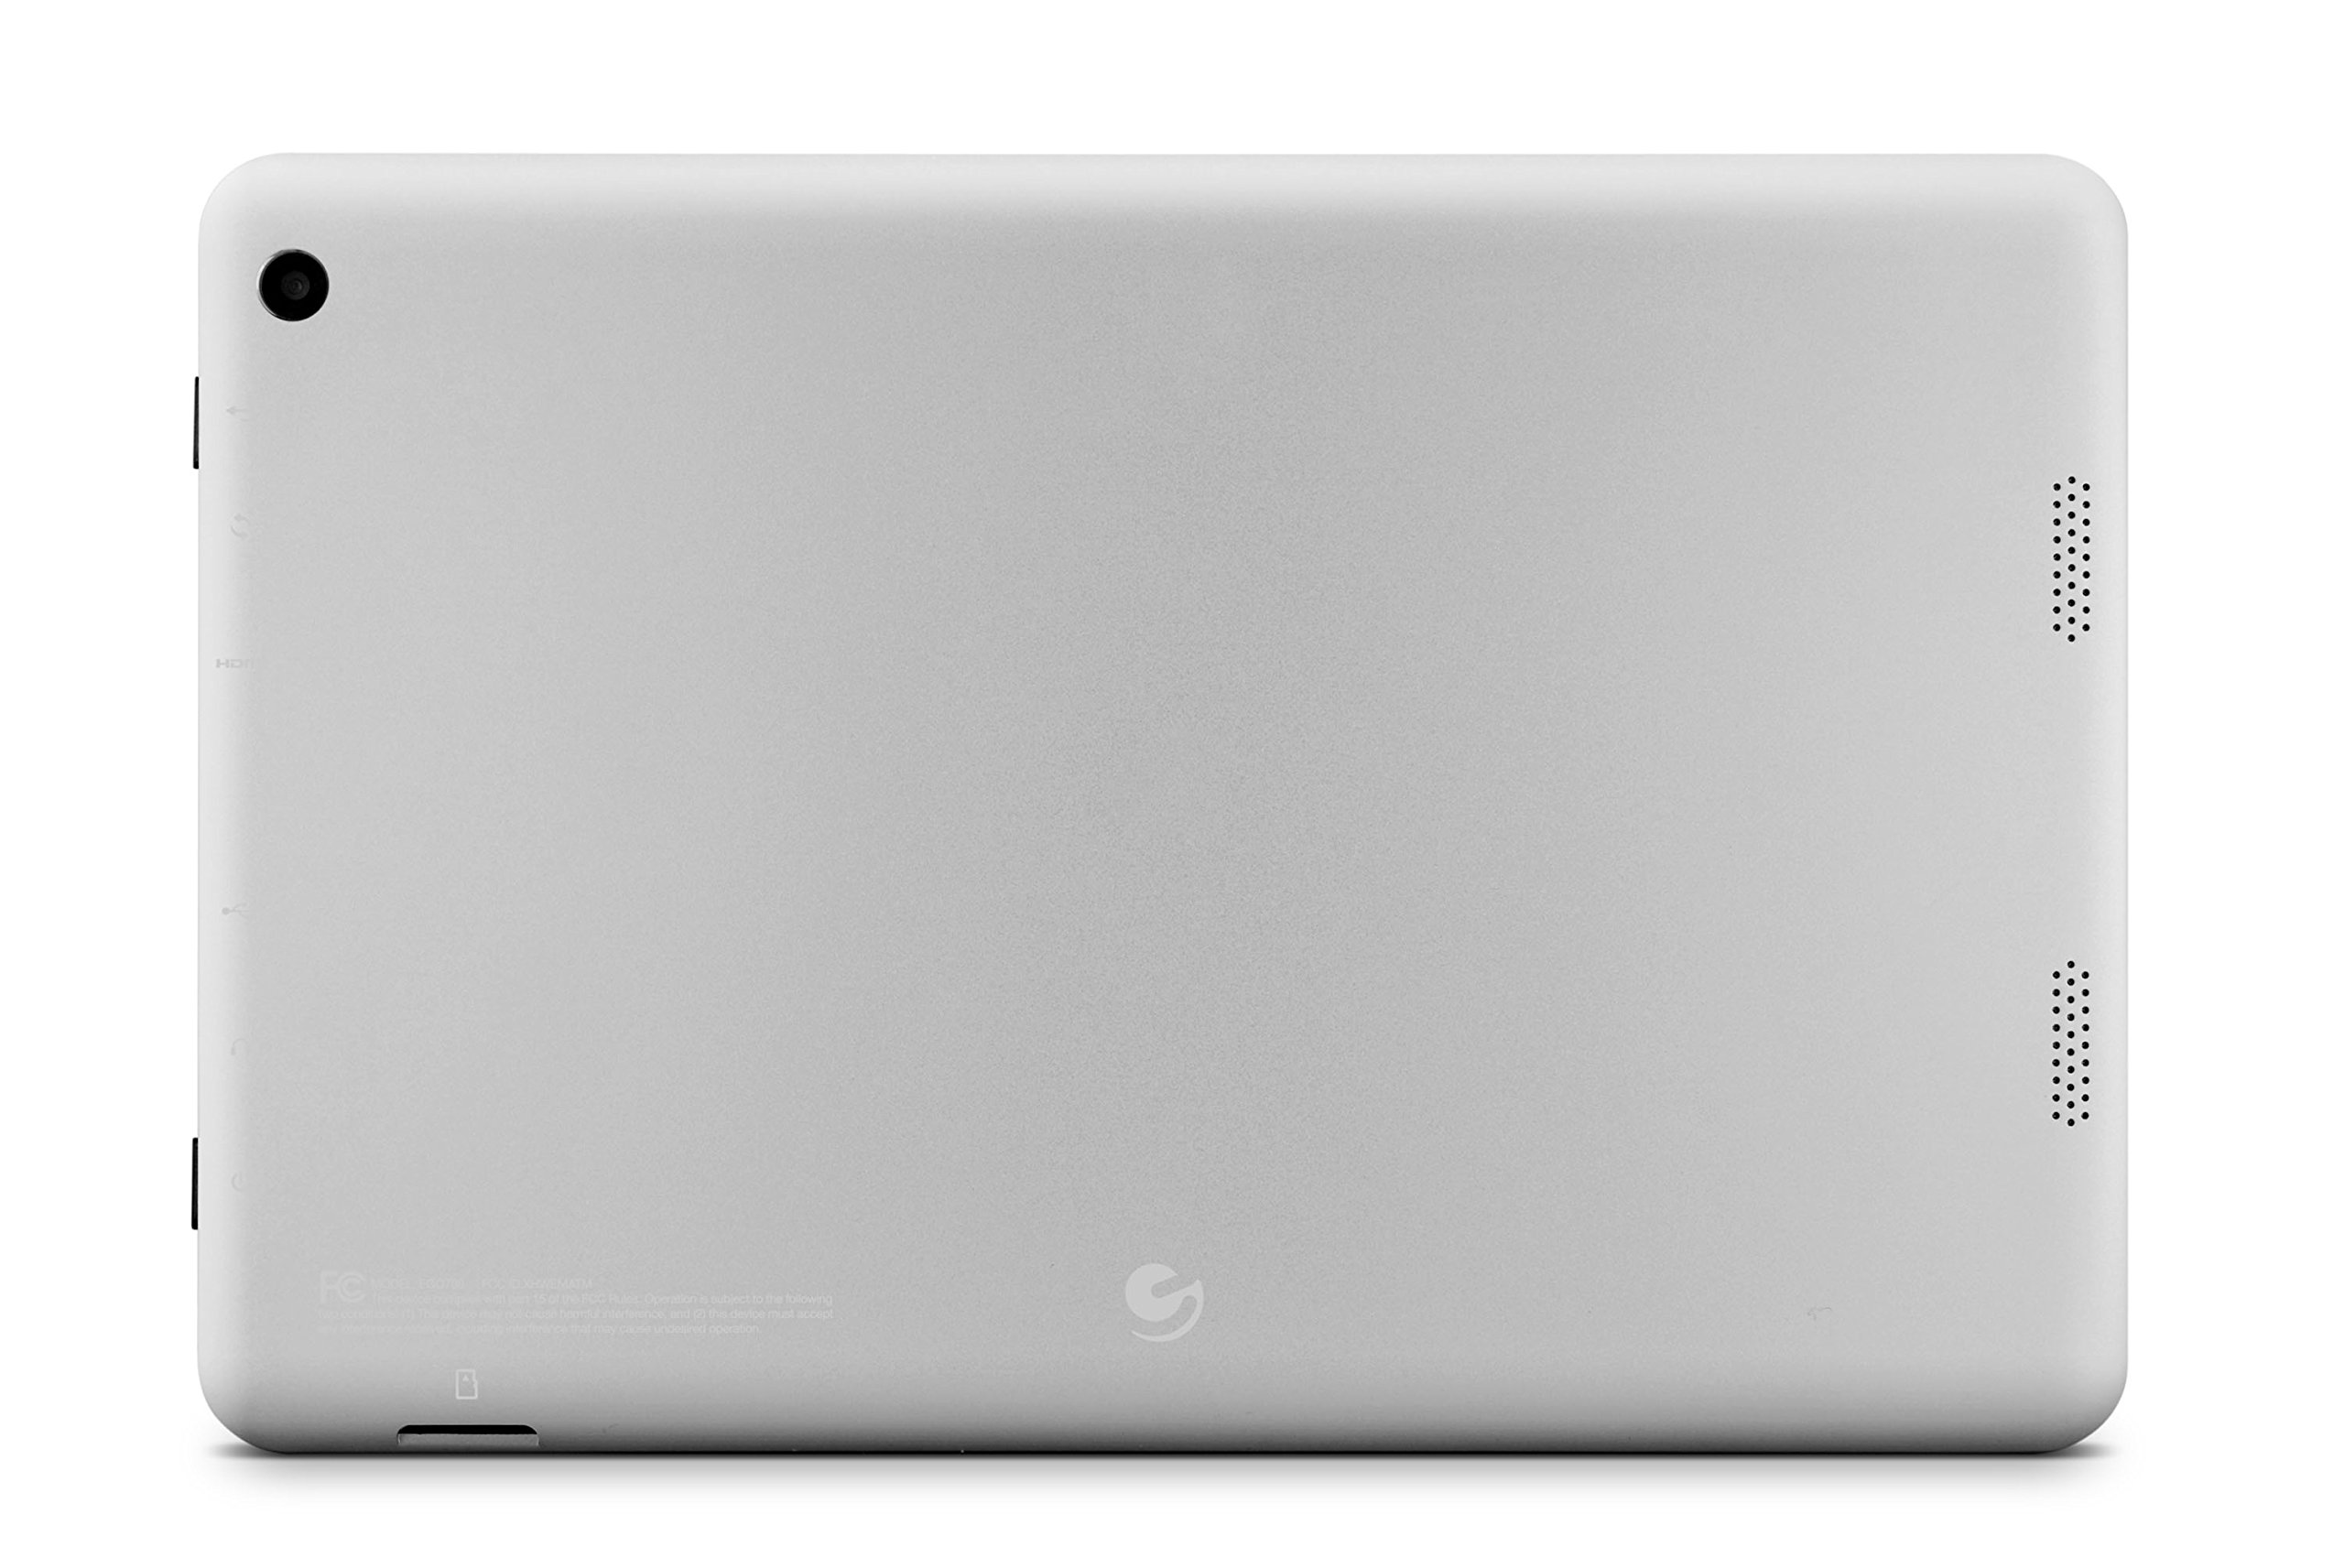 Ematic Quad-Core Tablet EGQ780SL-RB 7